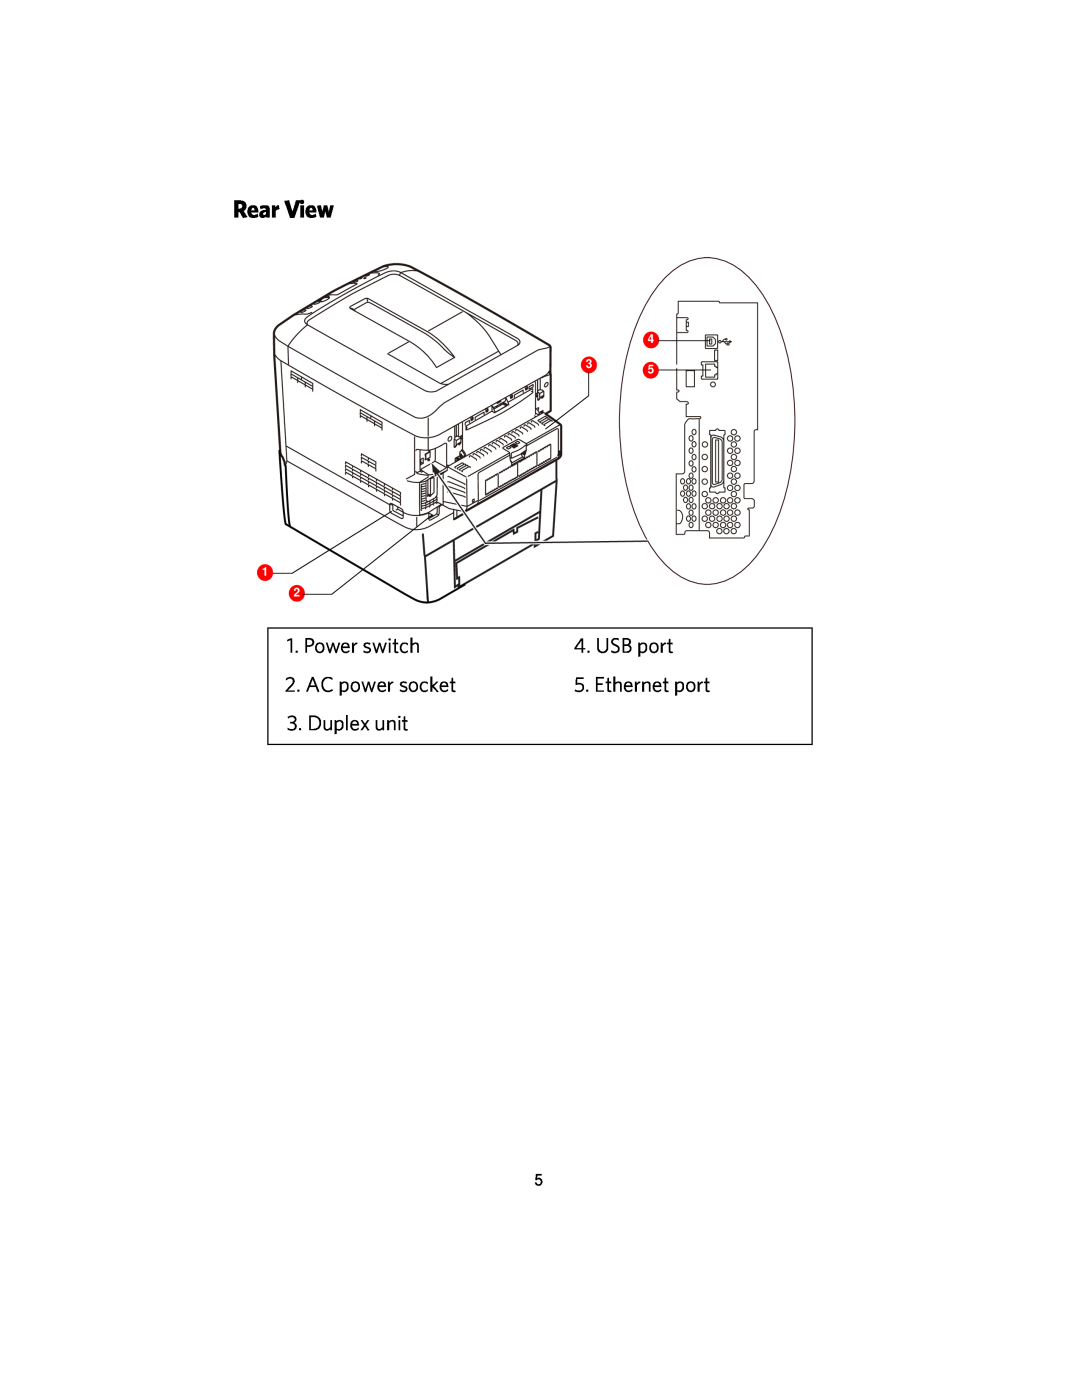 Kodak DL2100 manual Rear View, Power switch, USB port, AC power socket, Ethernet port, Duplex unit 